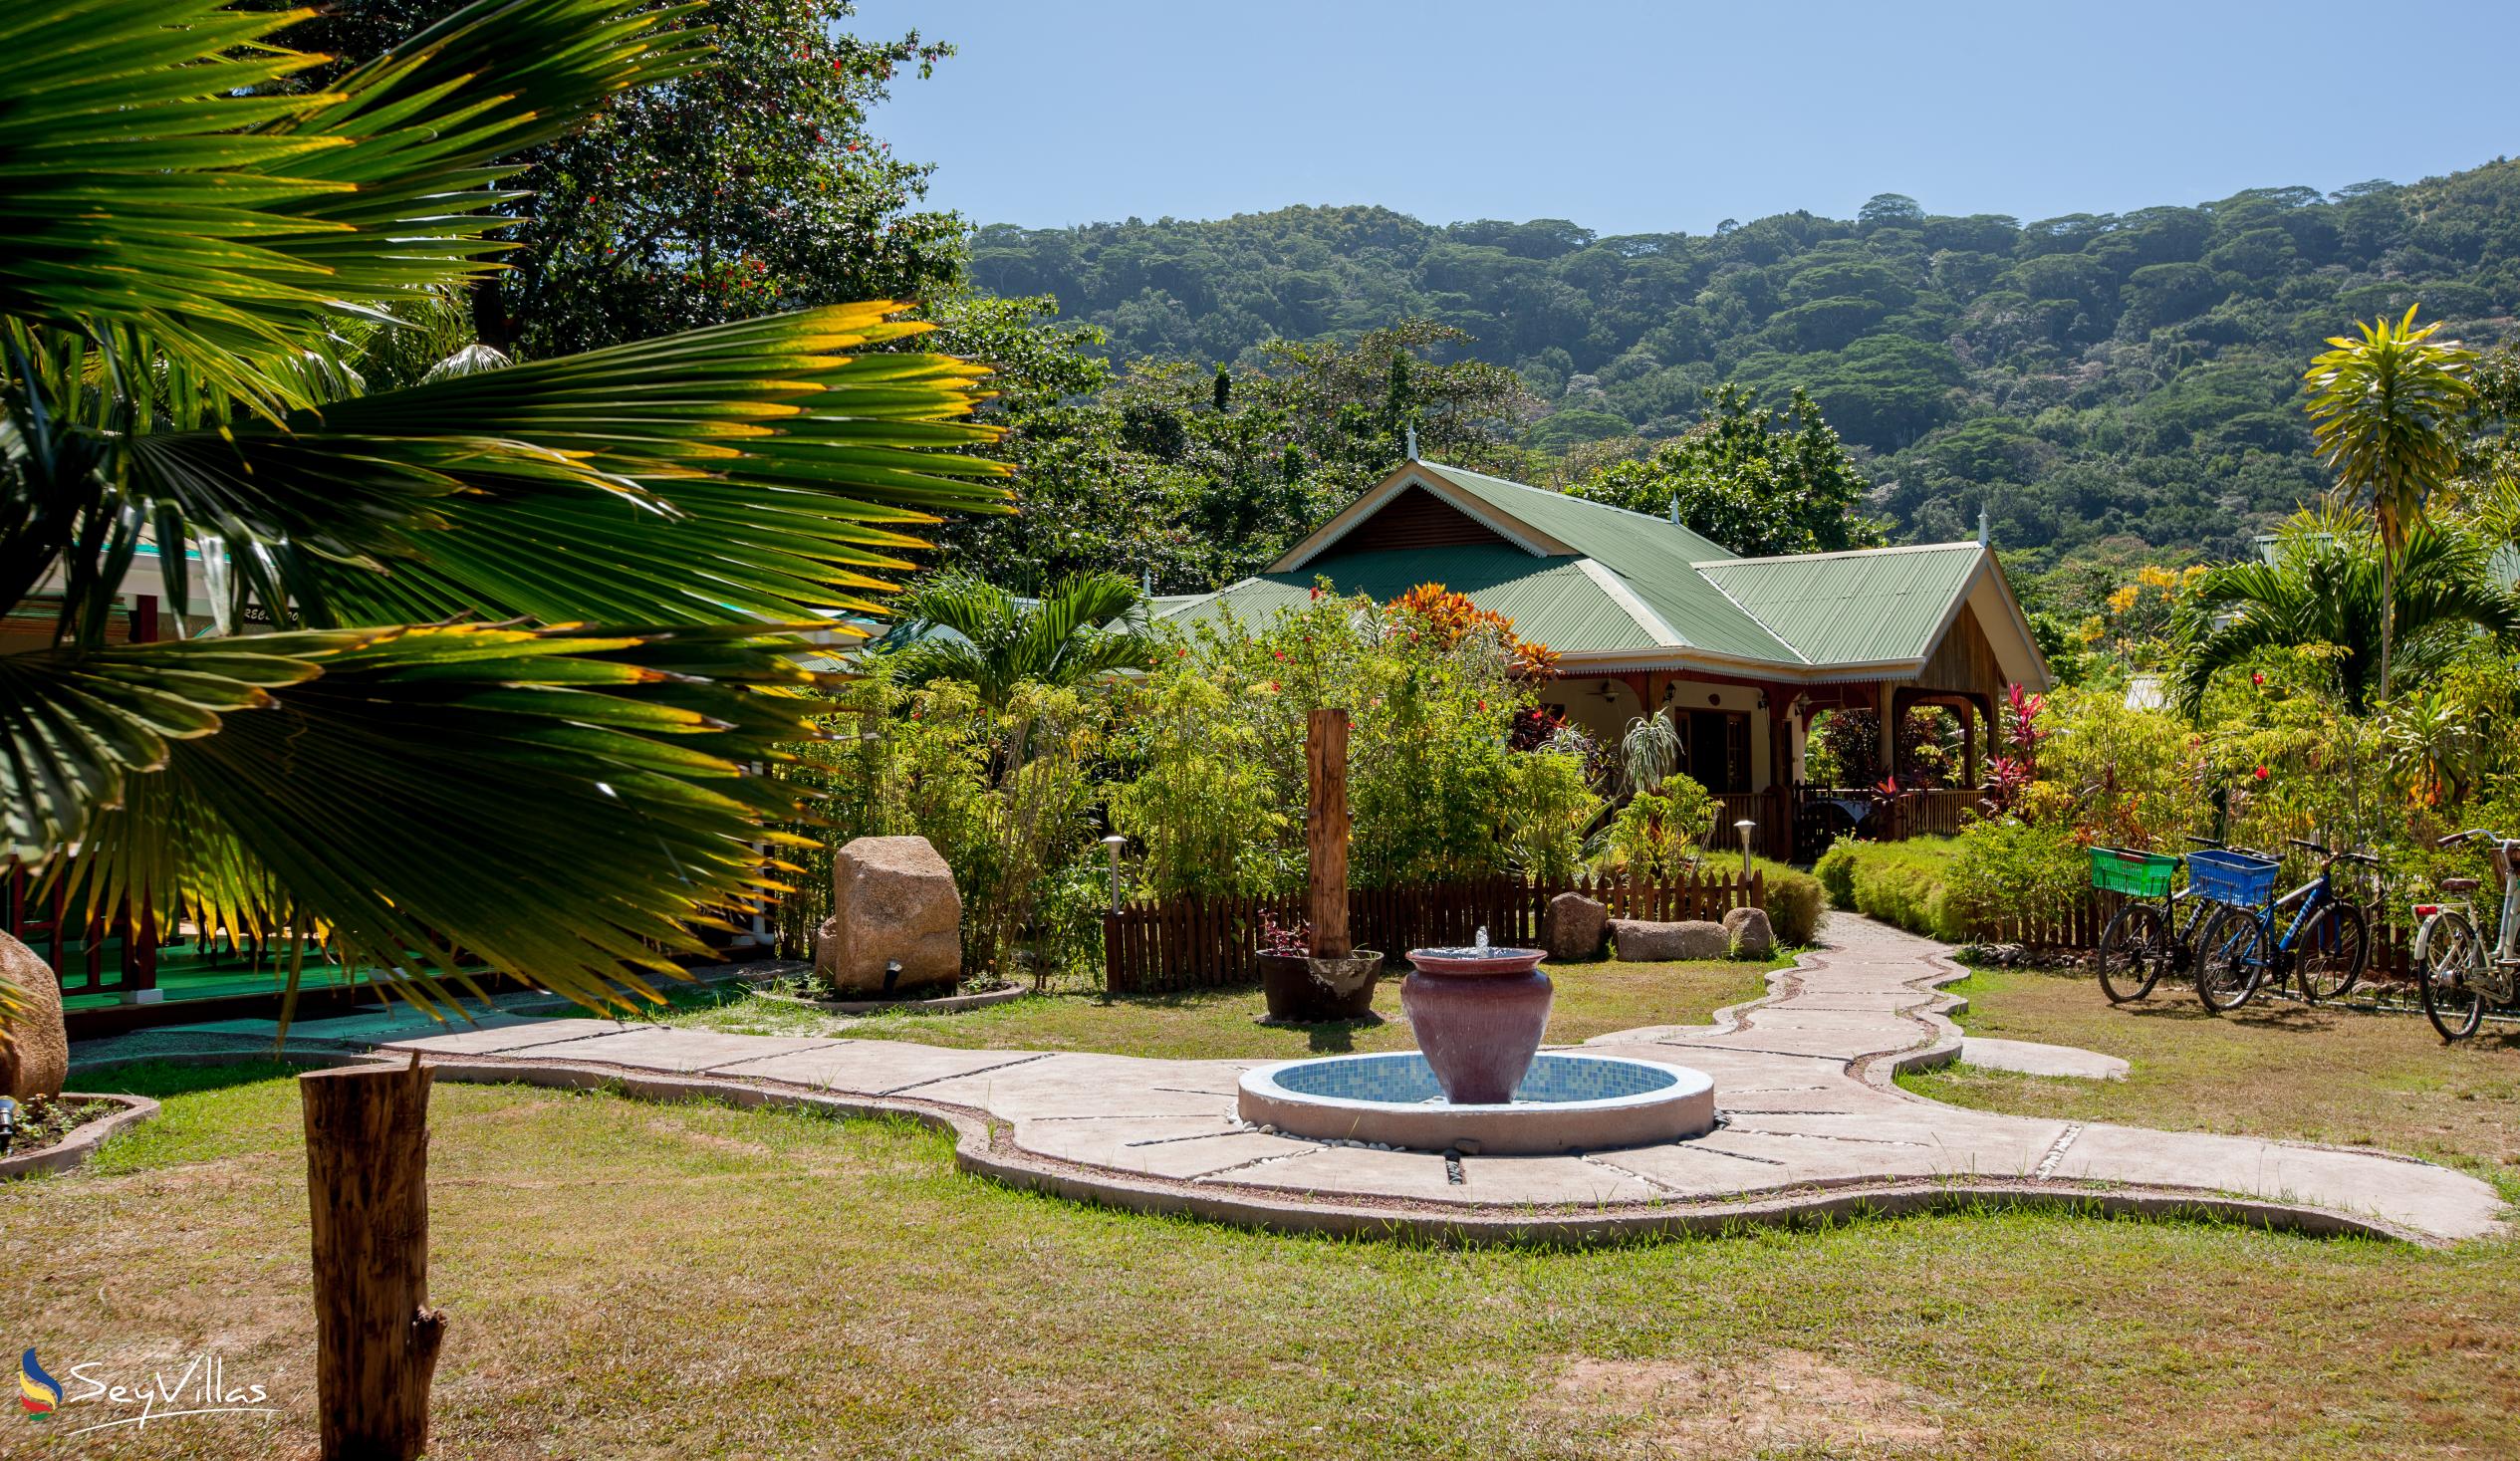 Foto 12: Casa de Leela - Aussenbereich - La Digue (Seychellen)